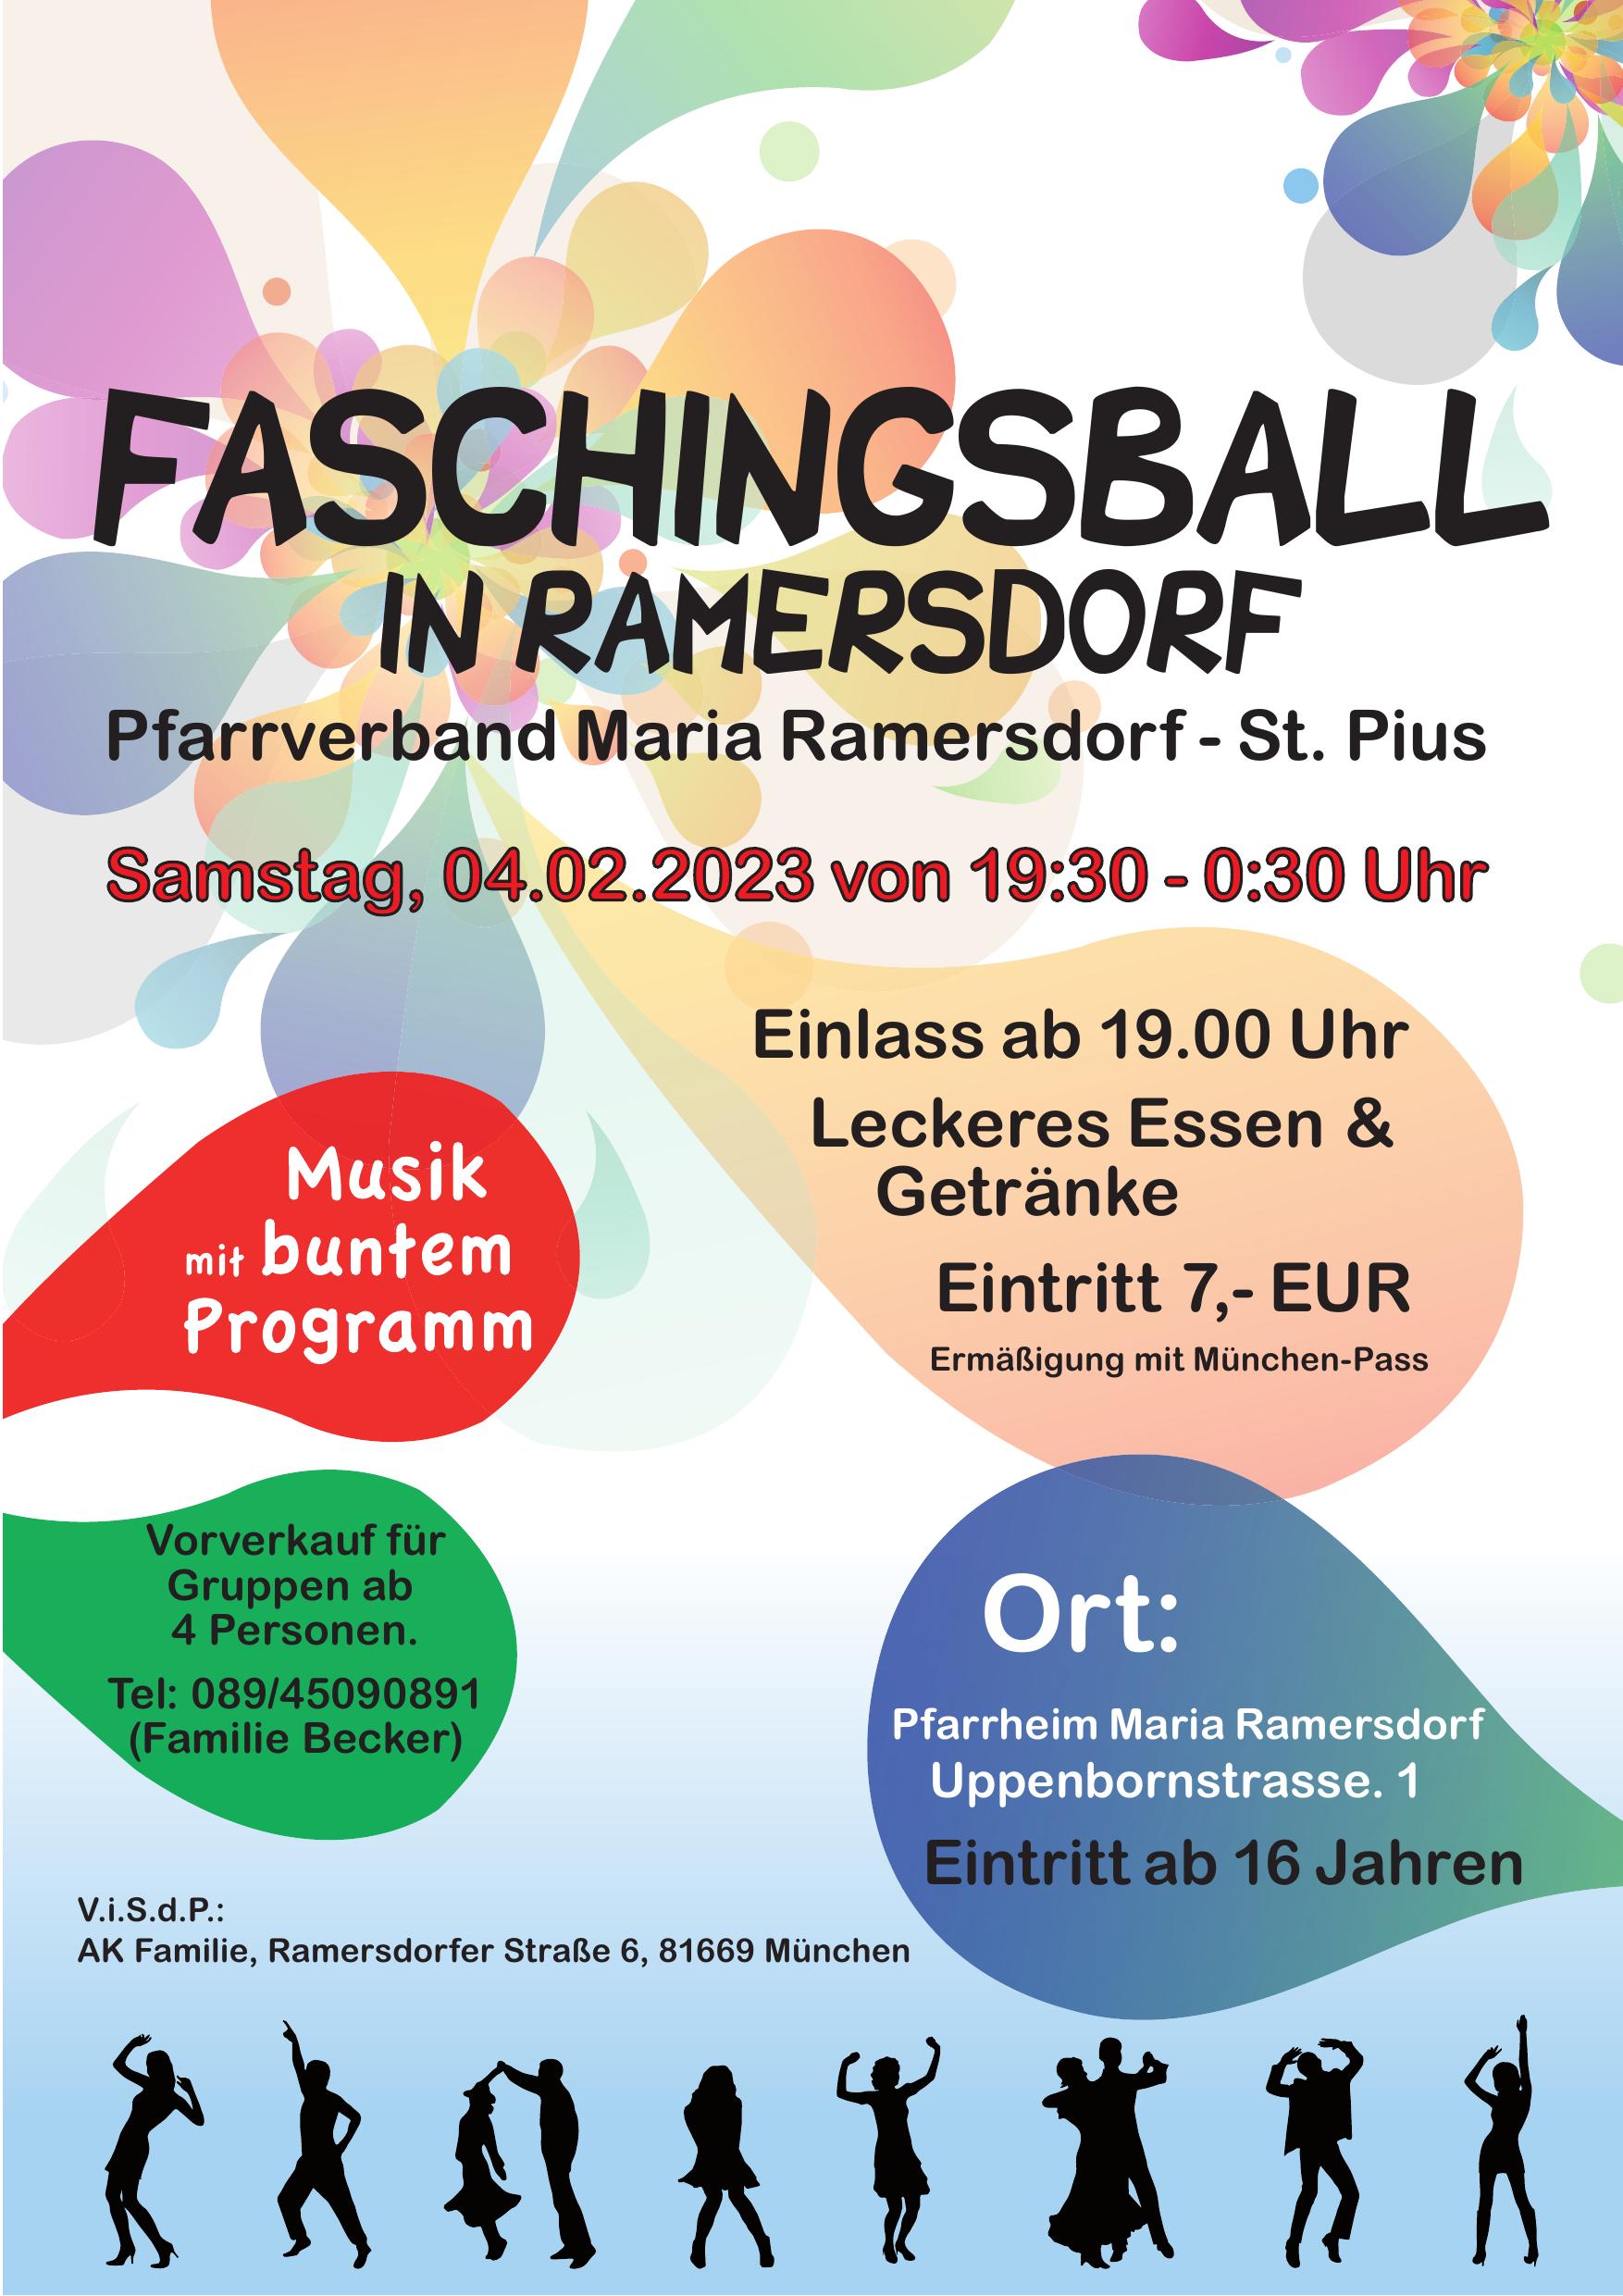 Faschingsplakat Ramersdorf 2023